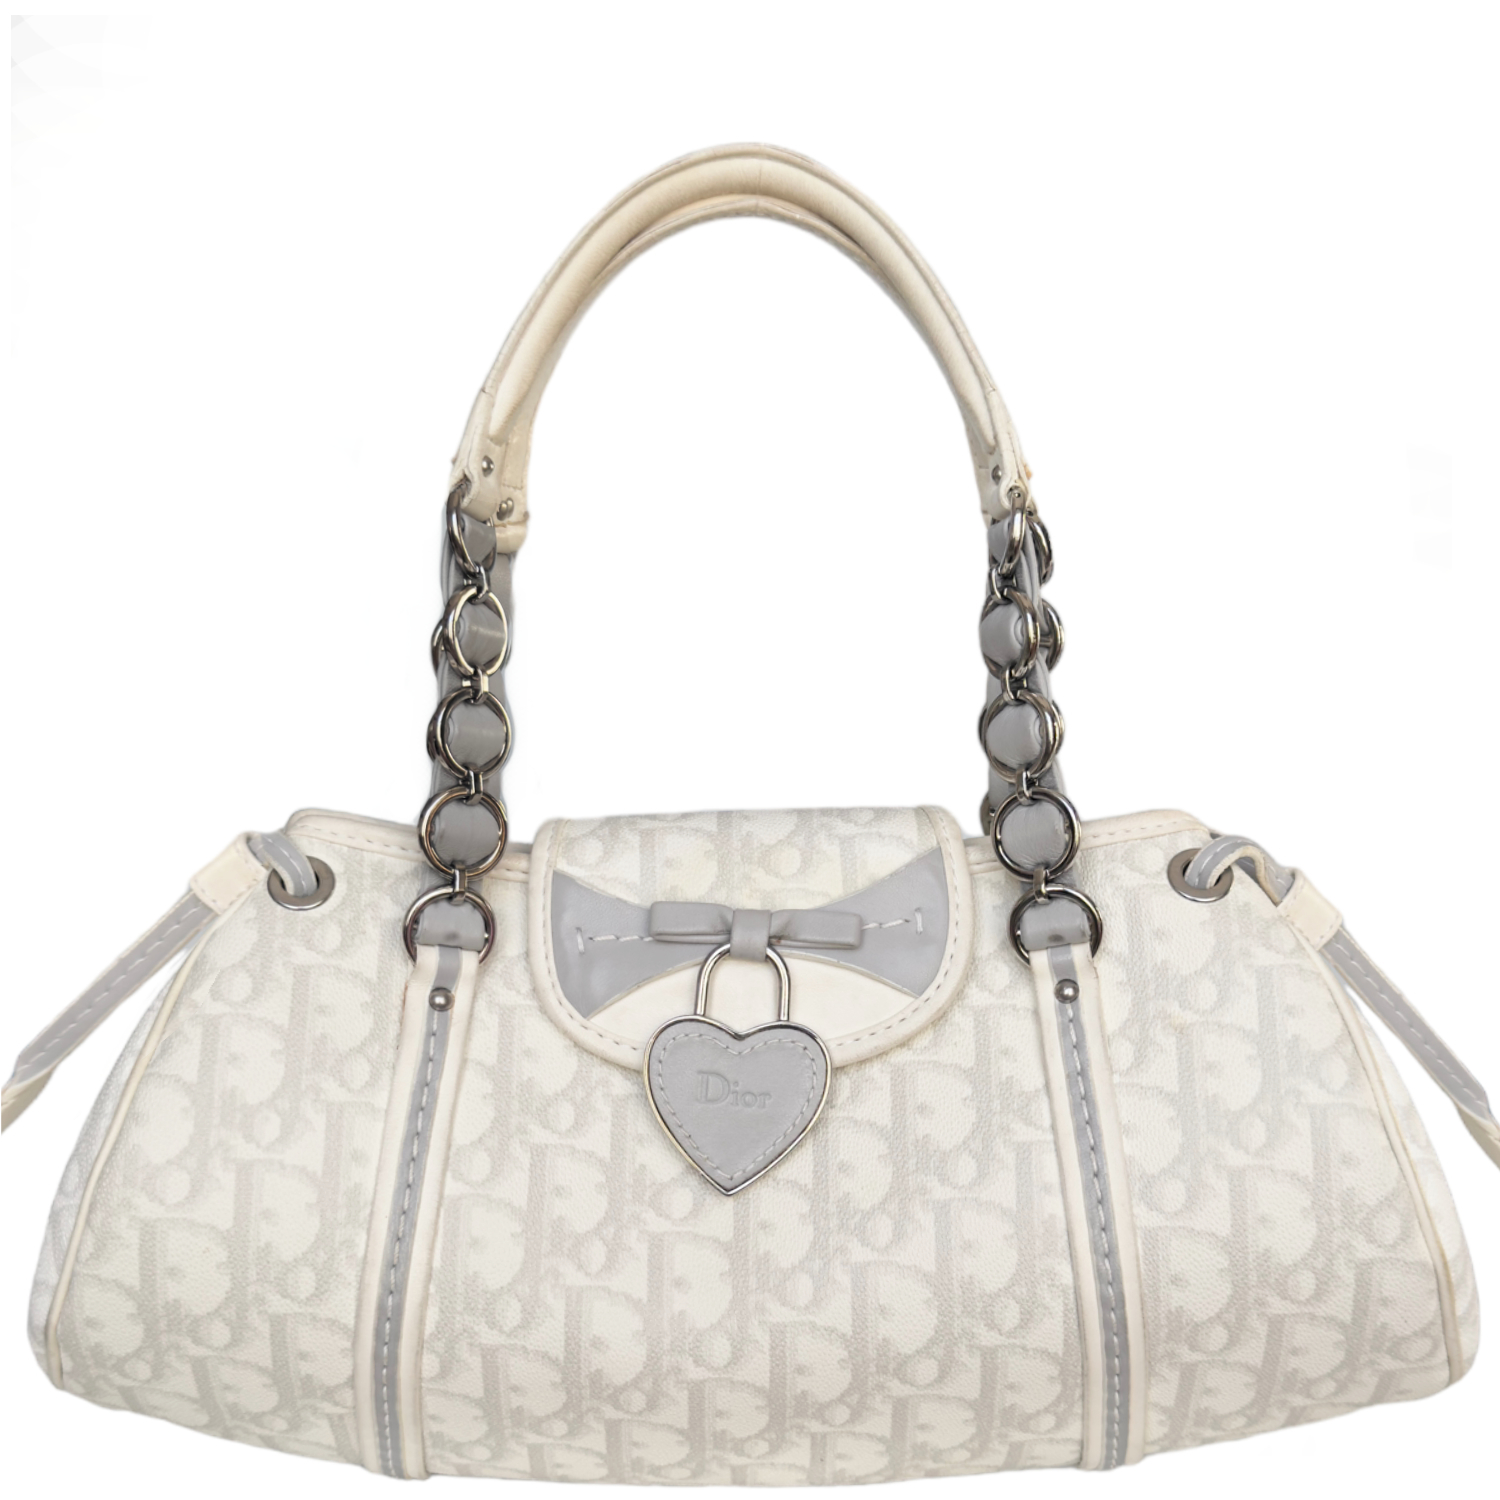 Vintage Dior Monogram Heart Romantic Shoulder Bag in White / Grey | NITRYL